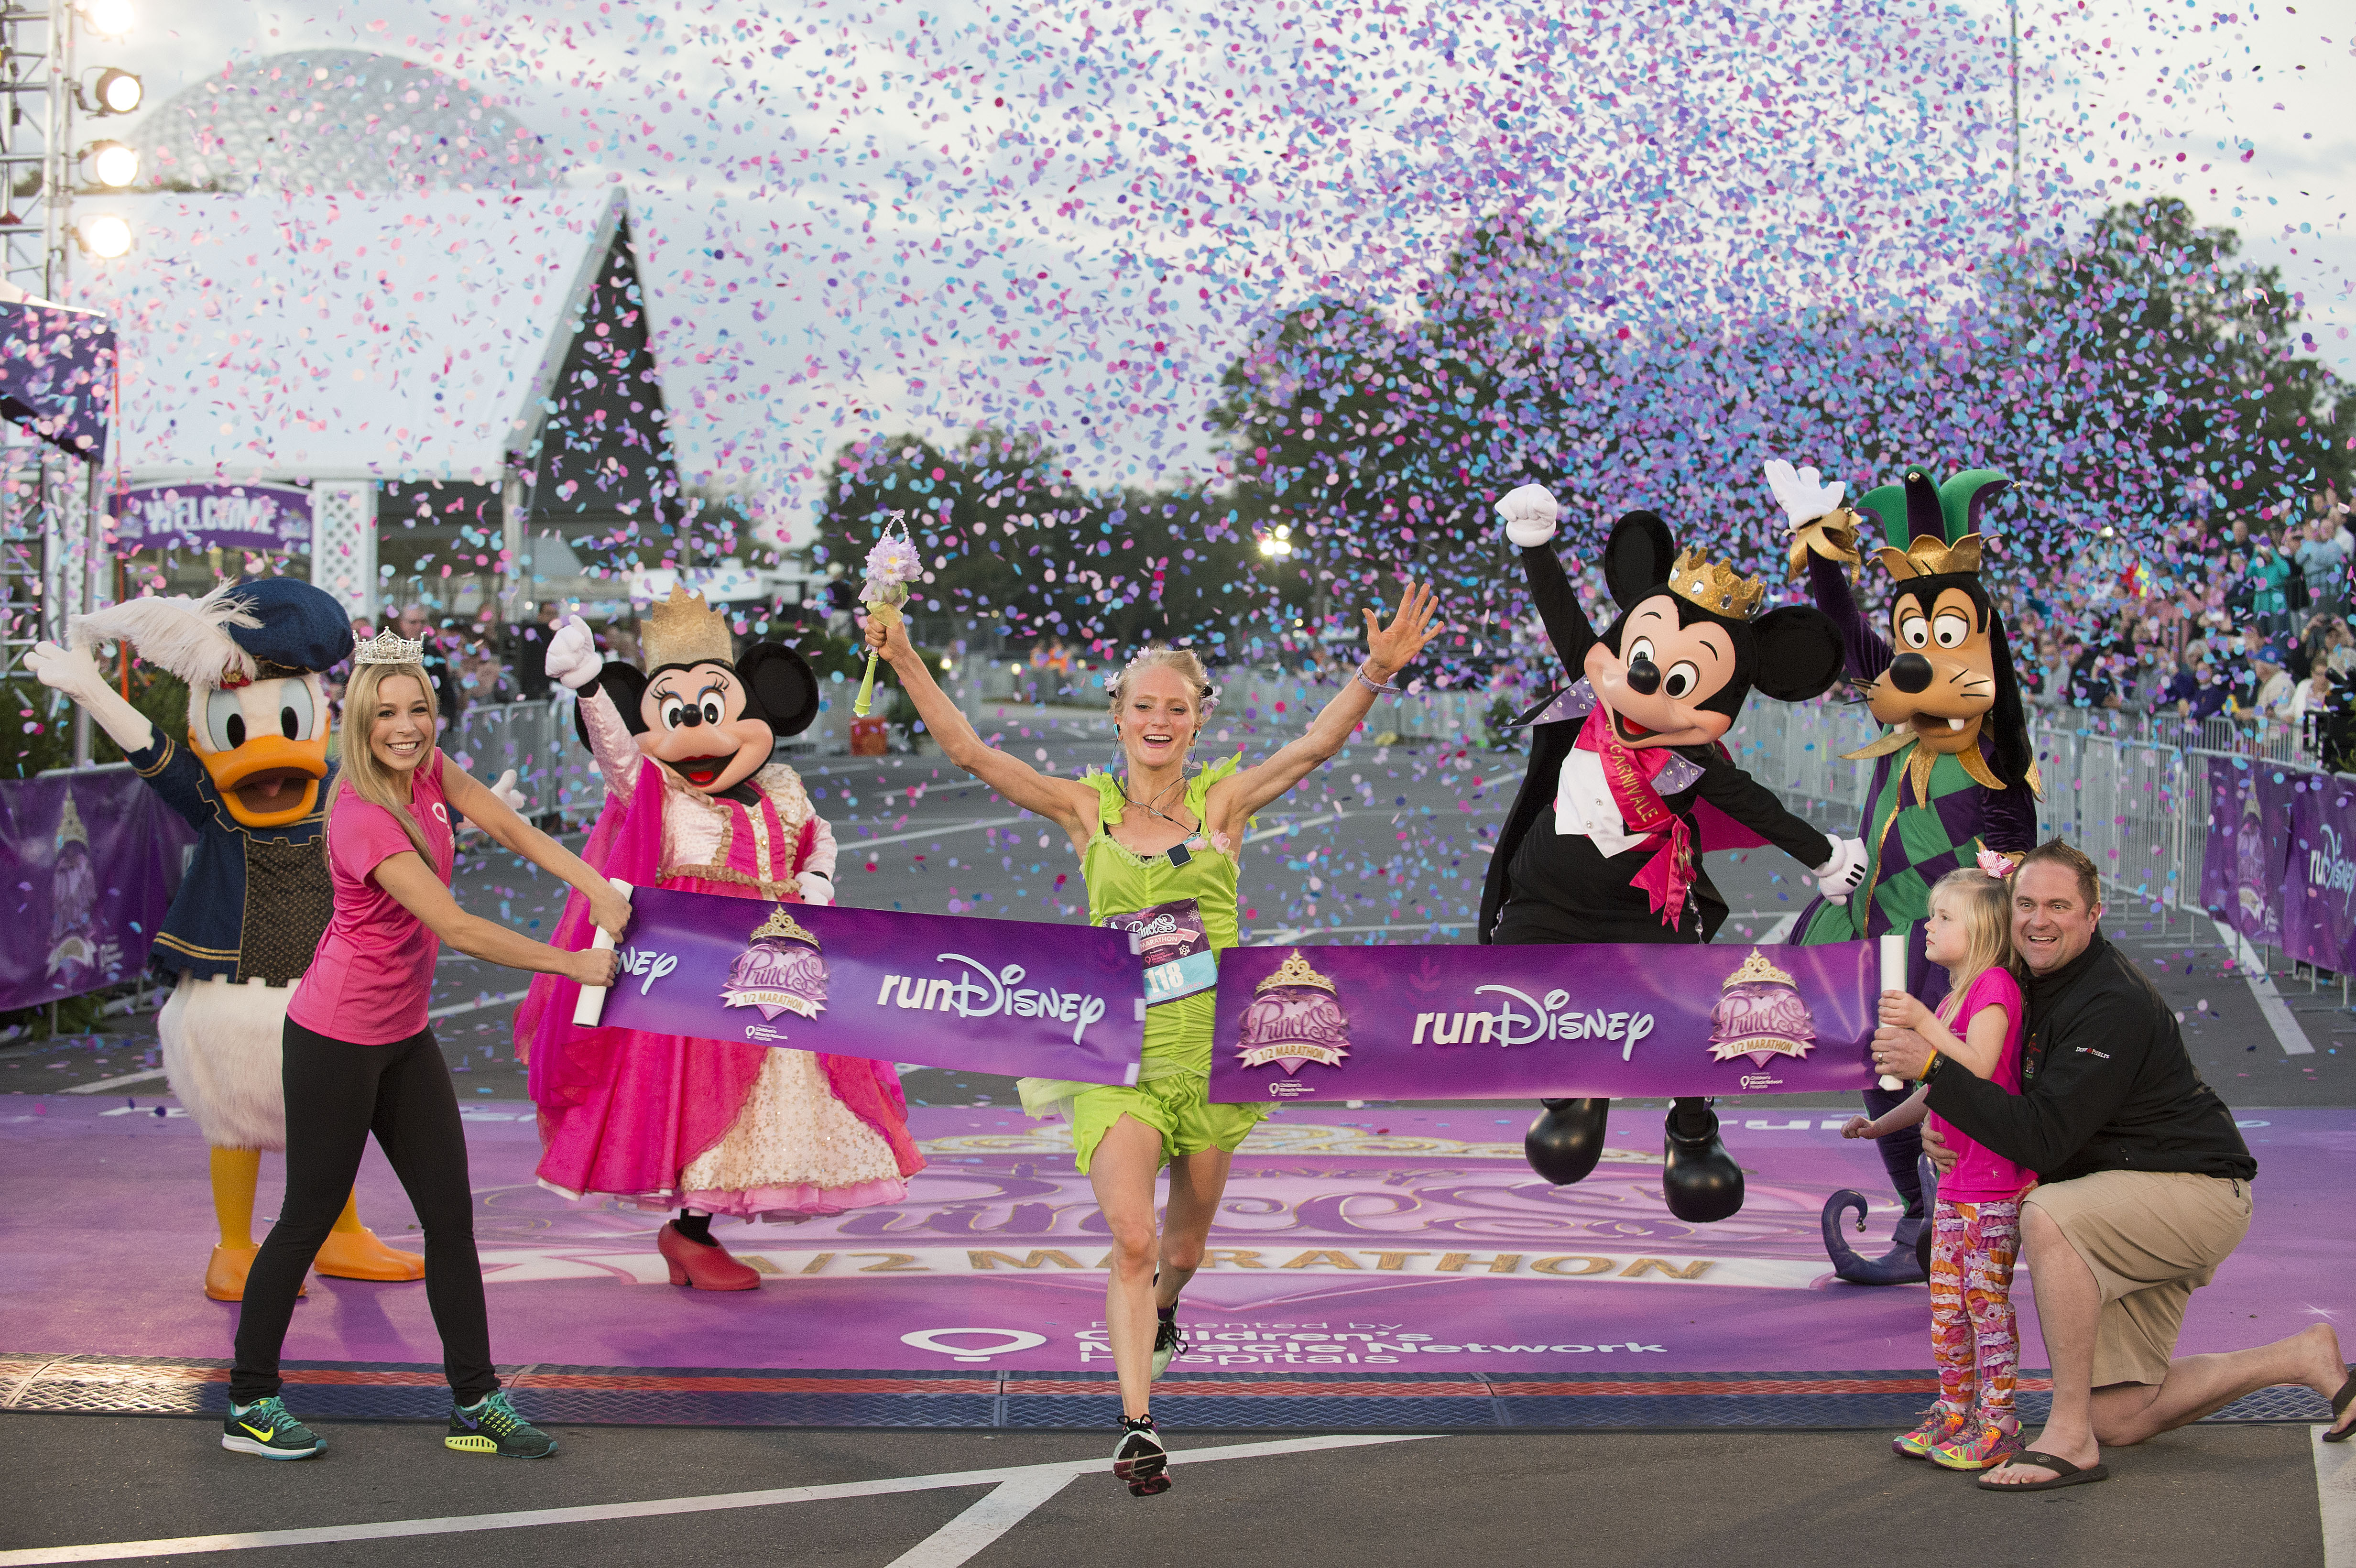 Lauren Passell Wins the Princess Half Marathon